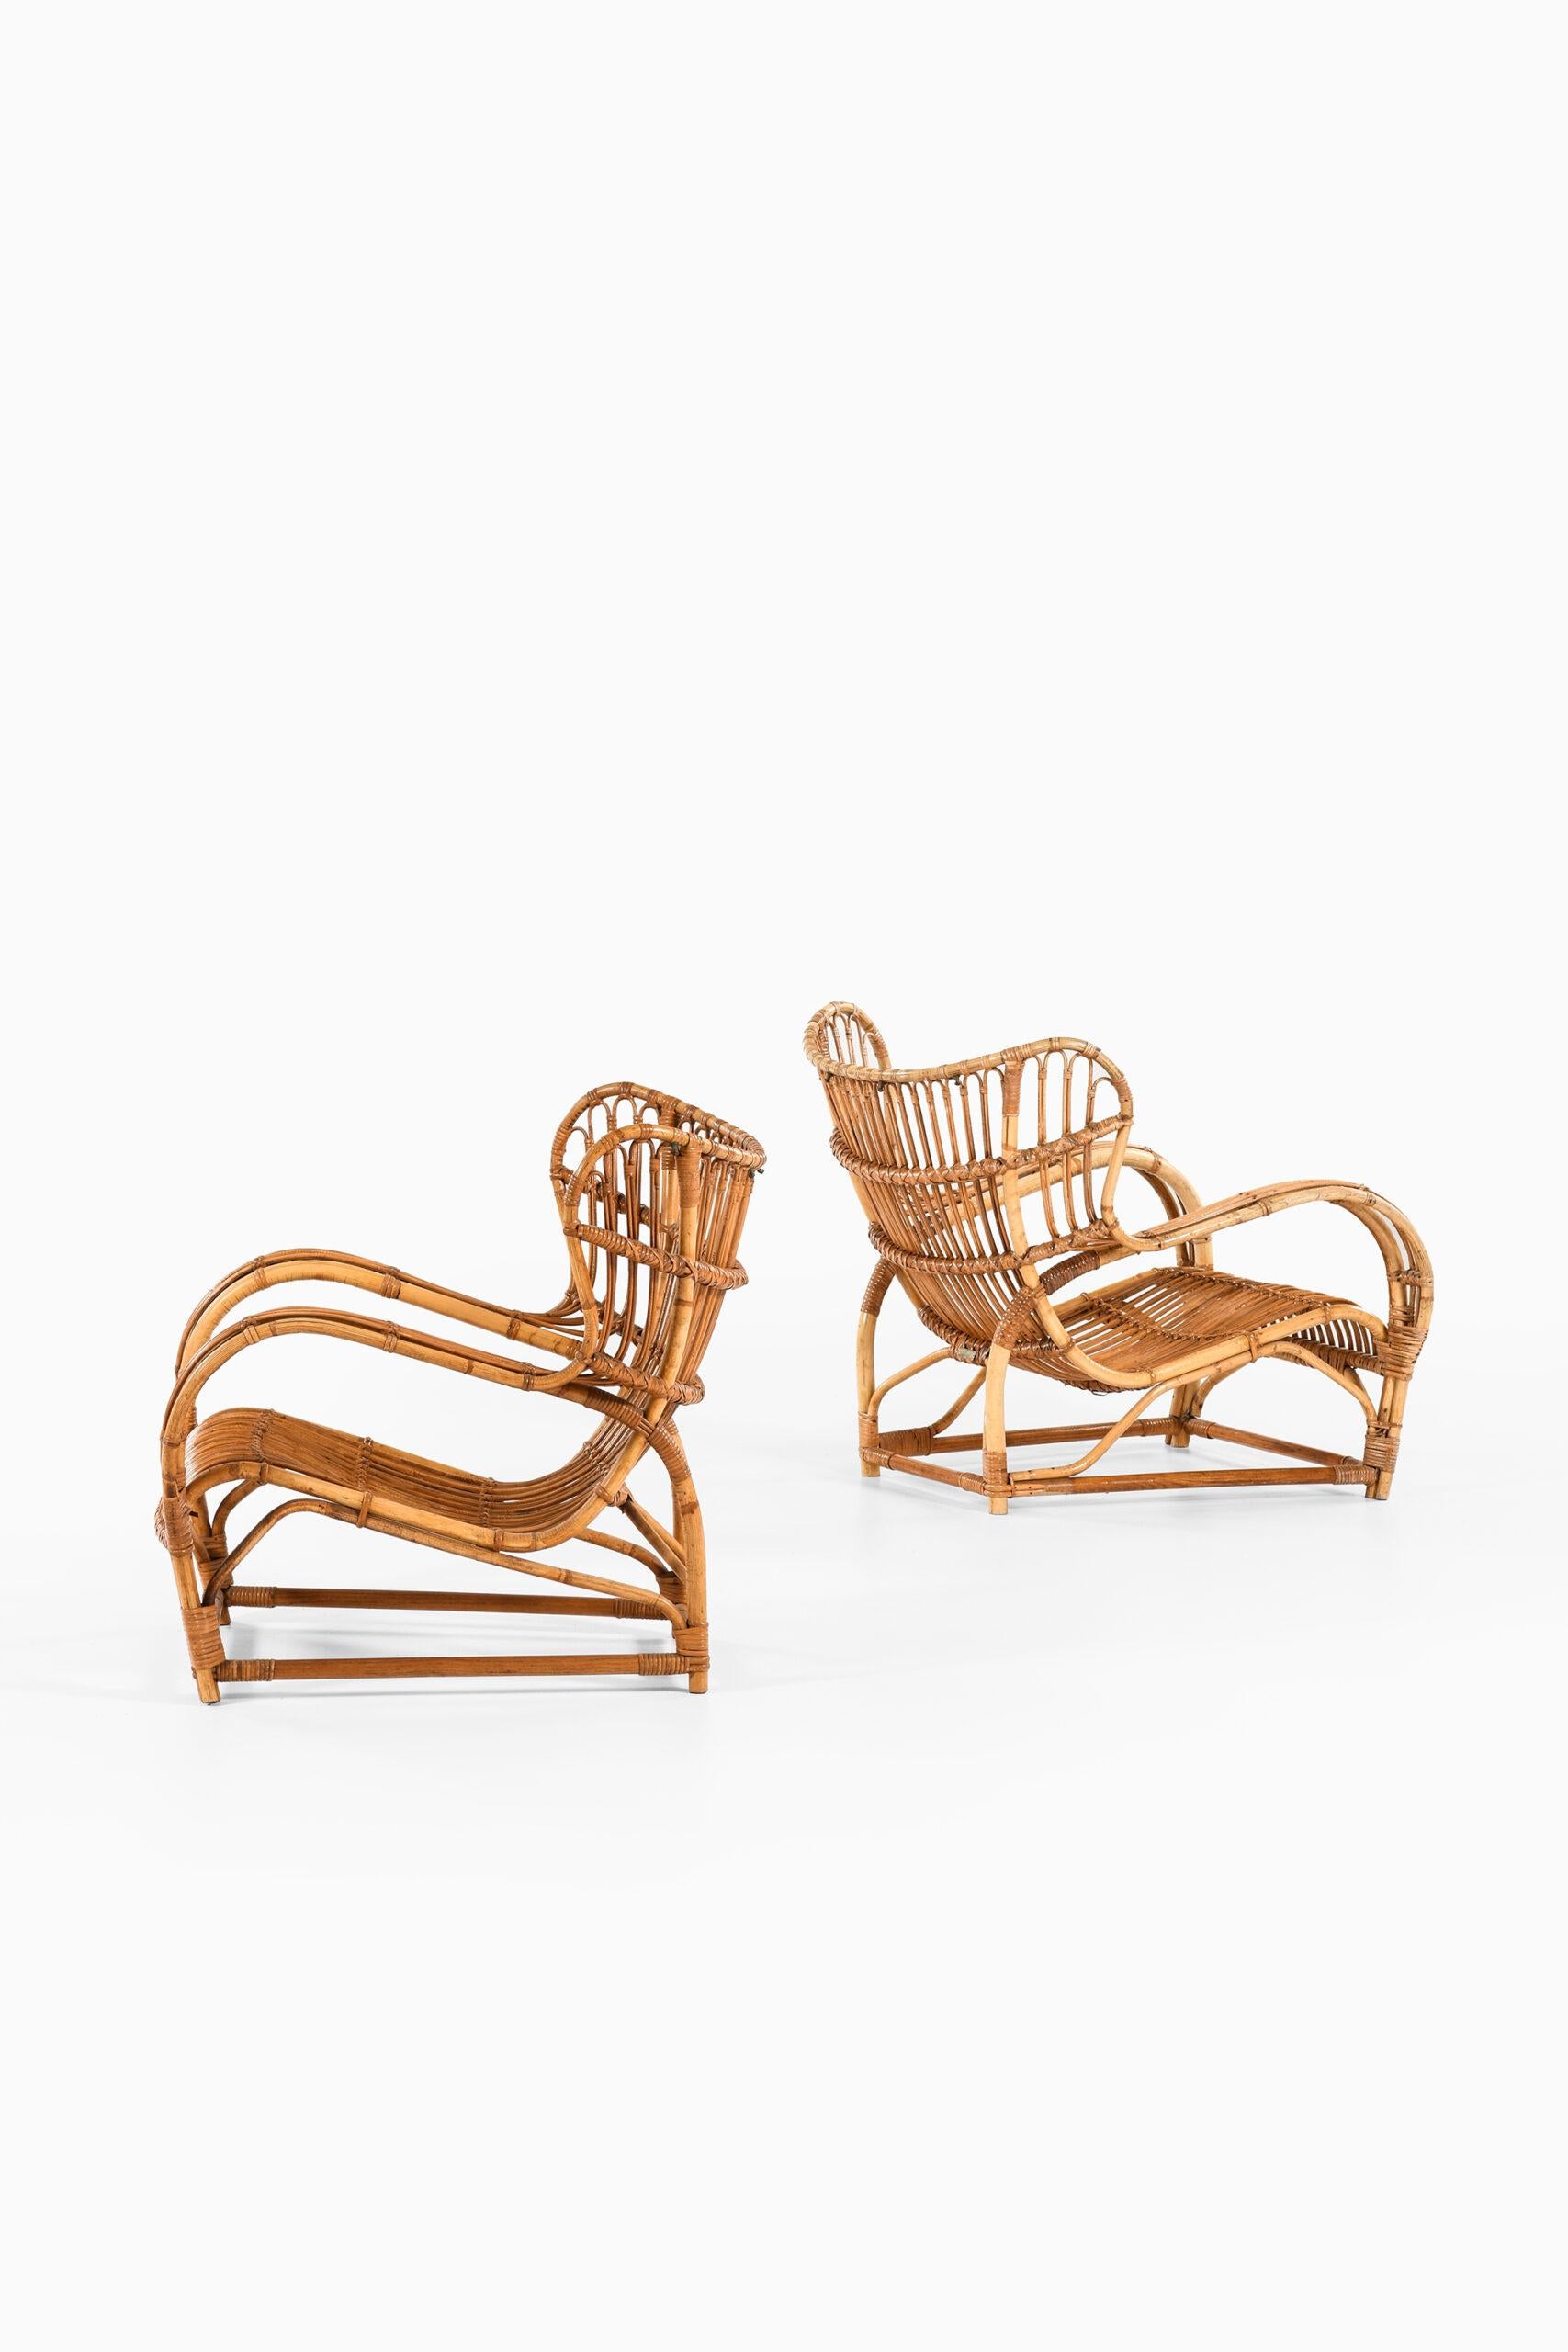 Scandinave moderne Viggo Boesen Easy Chairs Modèle 3440 Produit par R. Wengler au Danemark en vente